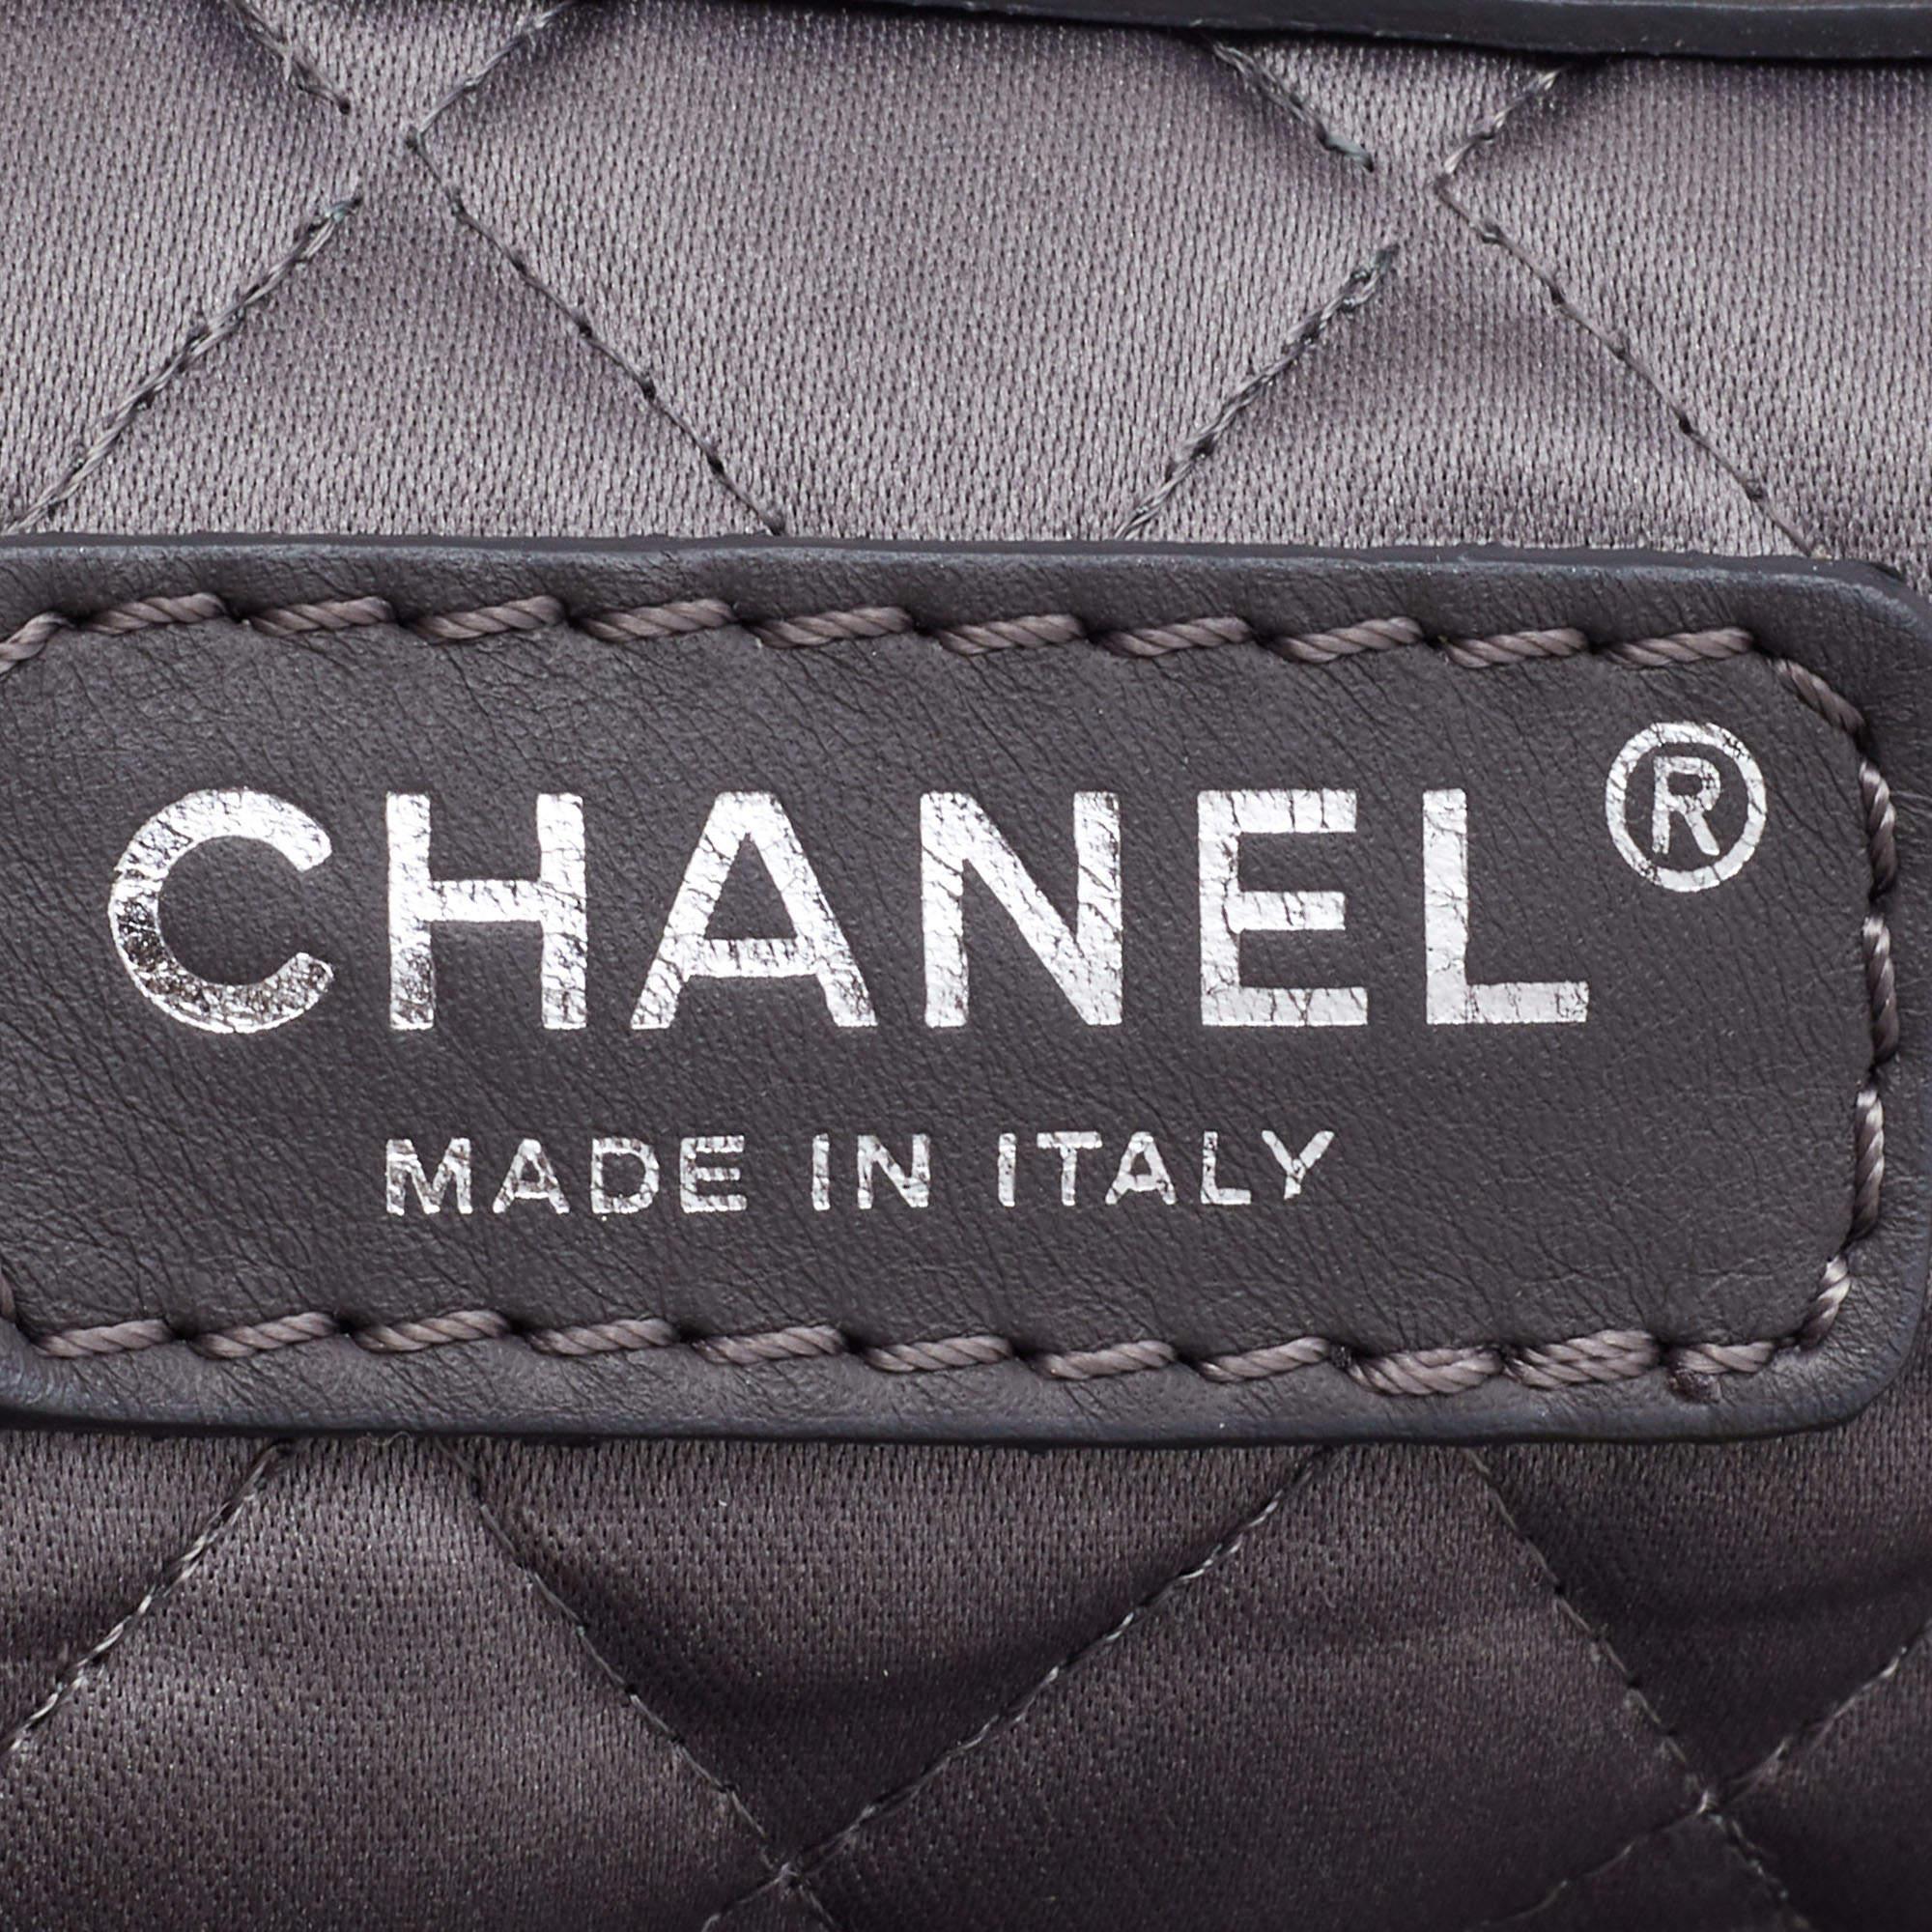 Chanel Gold Textured Leather Wild Stich Weekender Bag 5